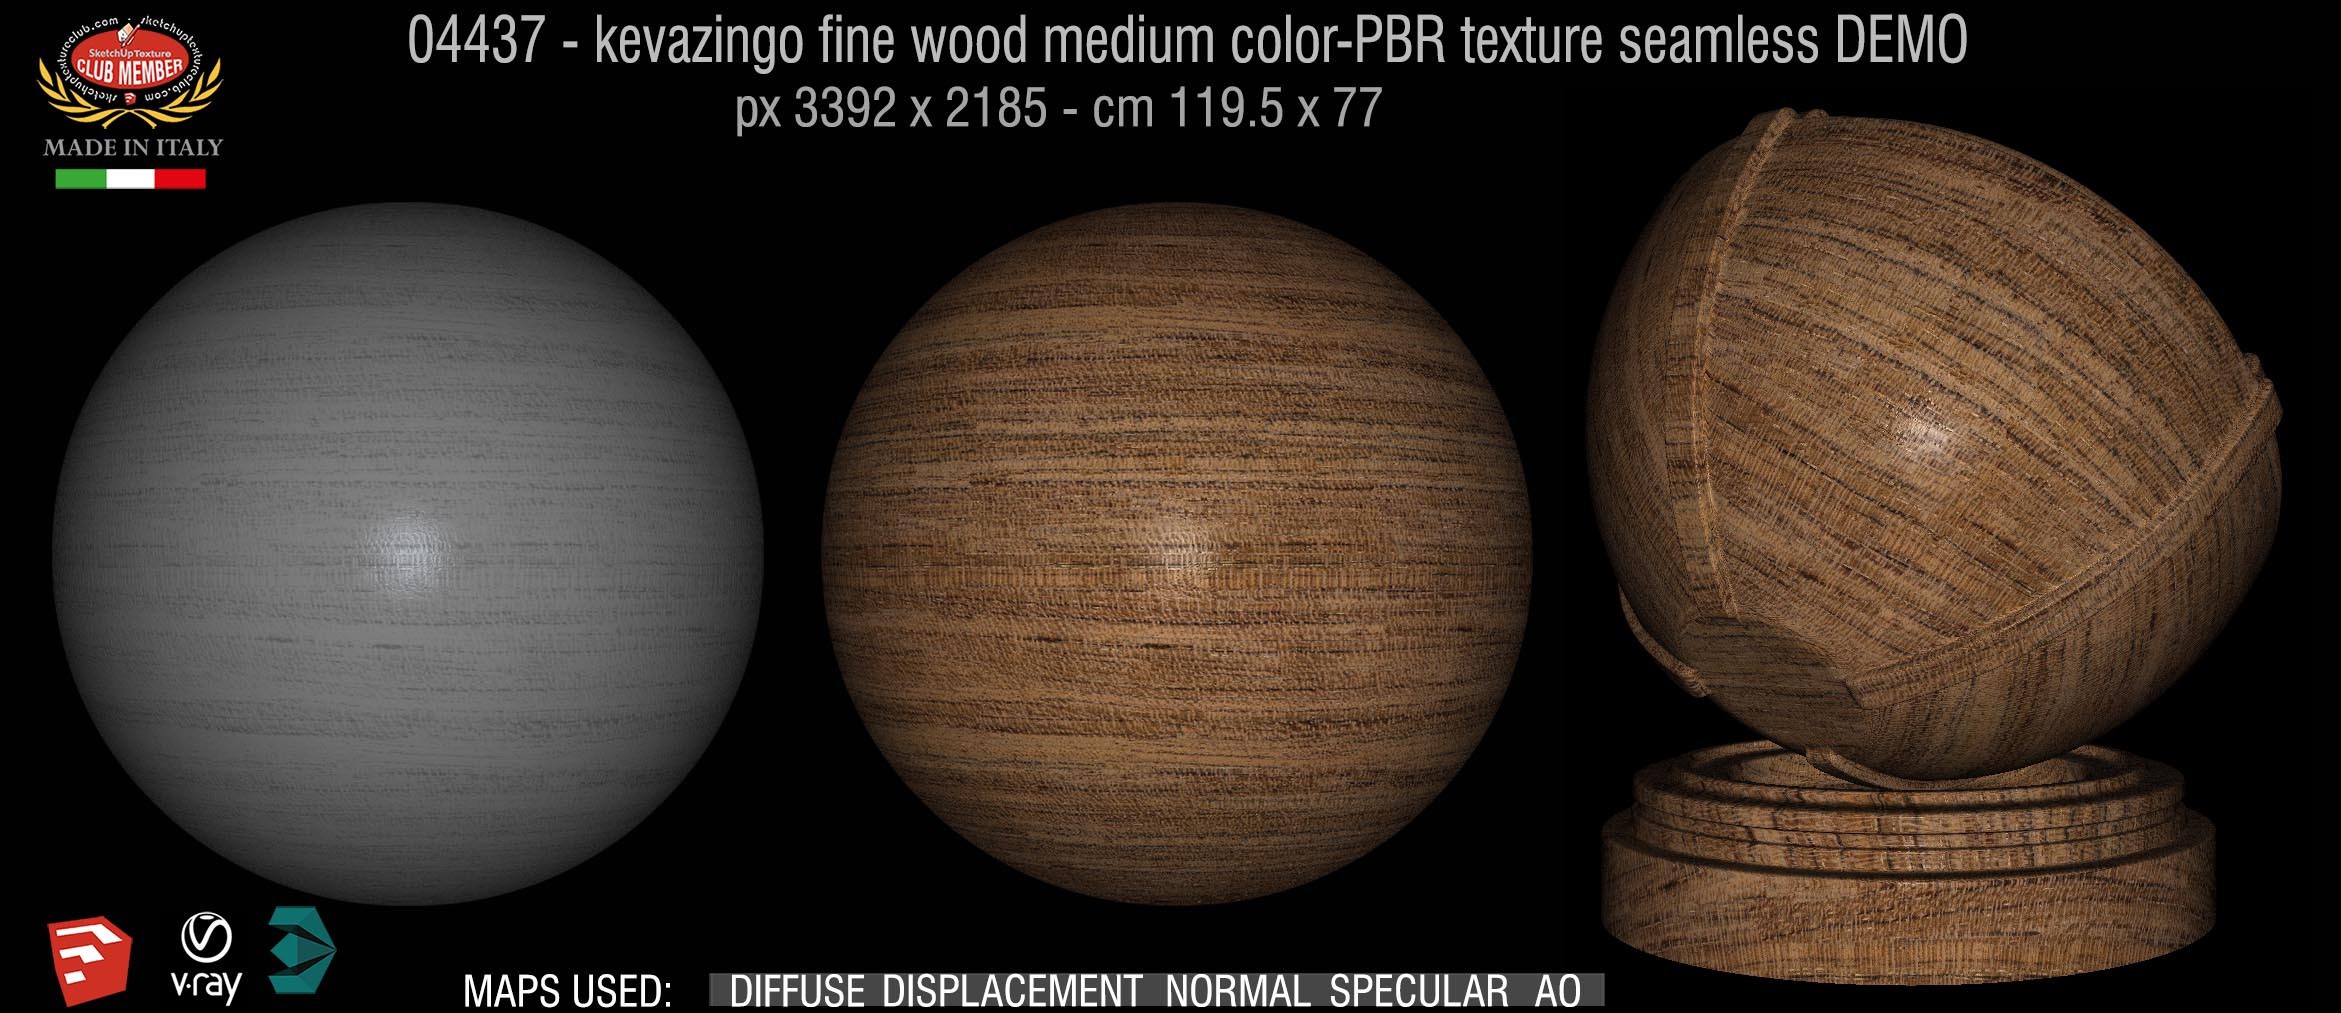 04437 kevazingo fine wood medium color-PBR texture seamless DEMO